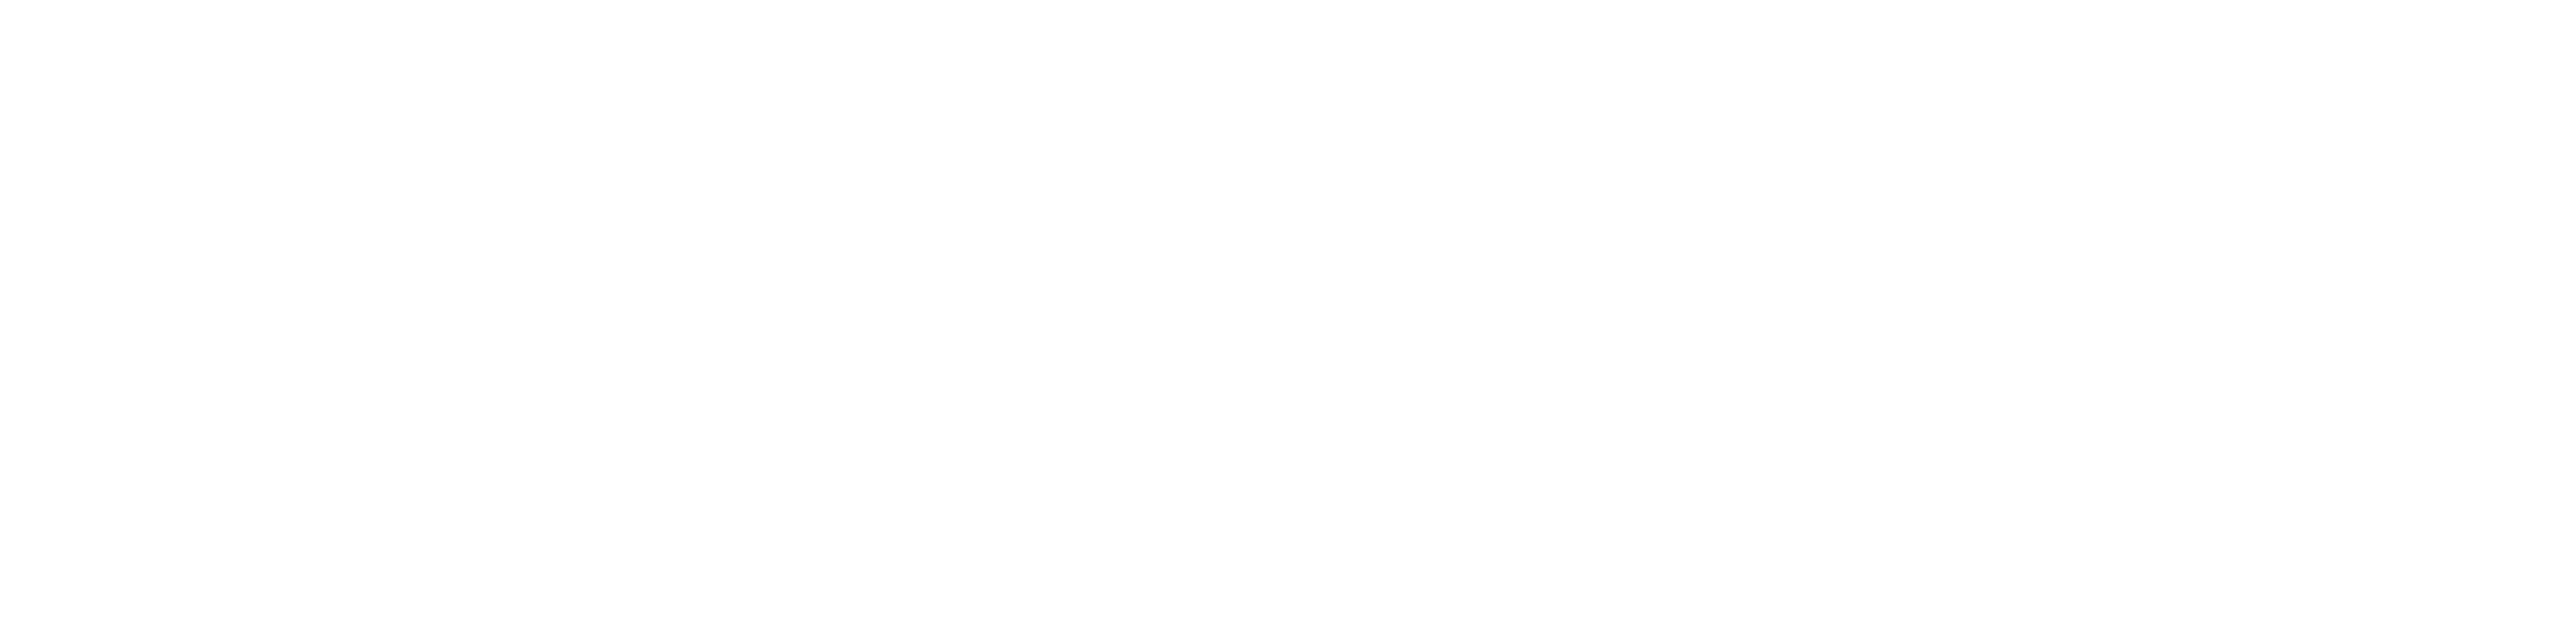 PEARL iZUMi Logo with Break Away font added